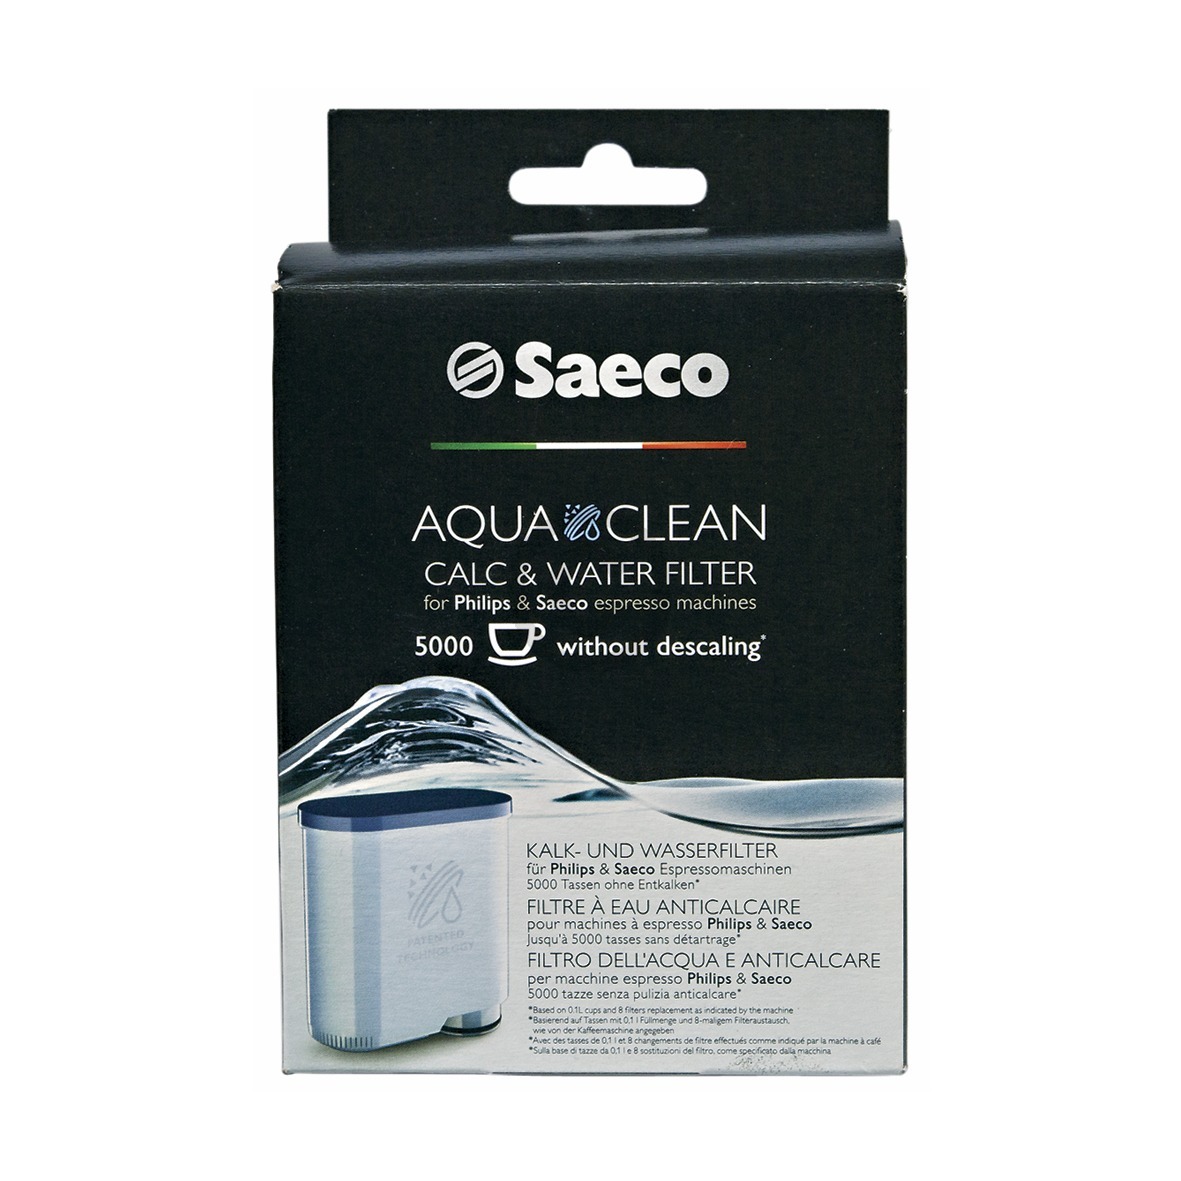 Wasserfilter Saeco 421944050461 AquaClean CA6903/00 Click&Go-System für Kaffeemaschine